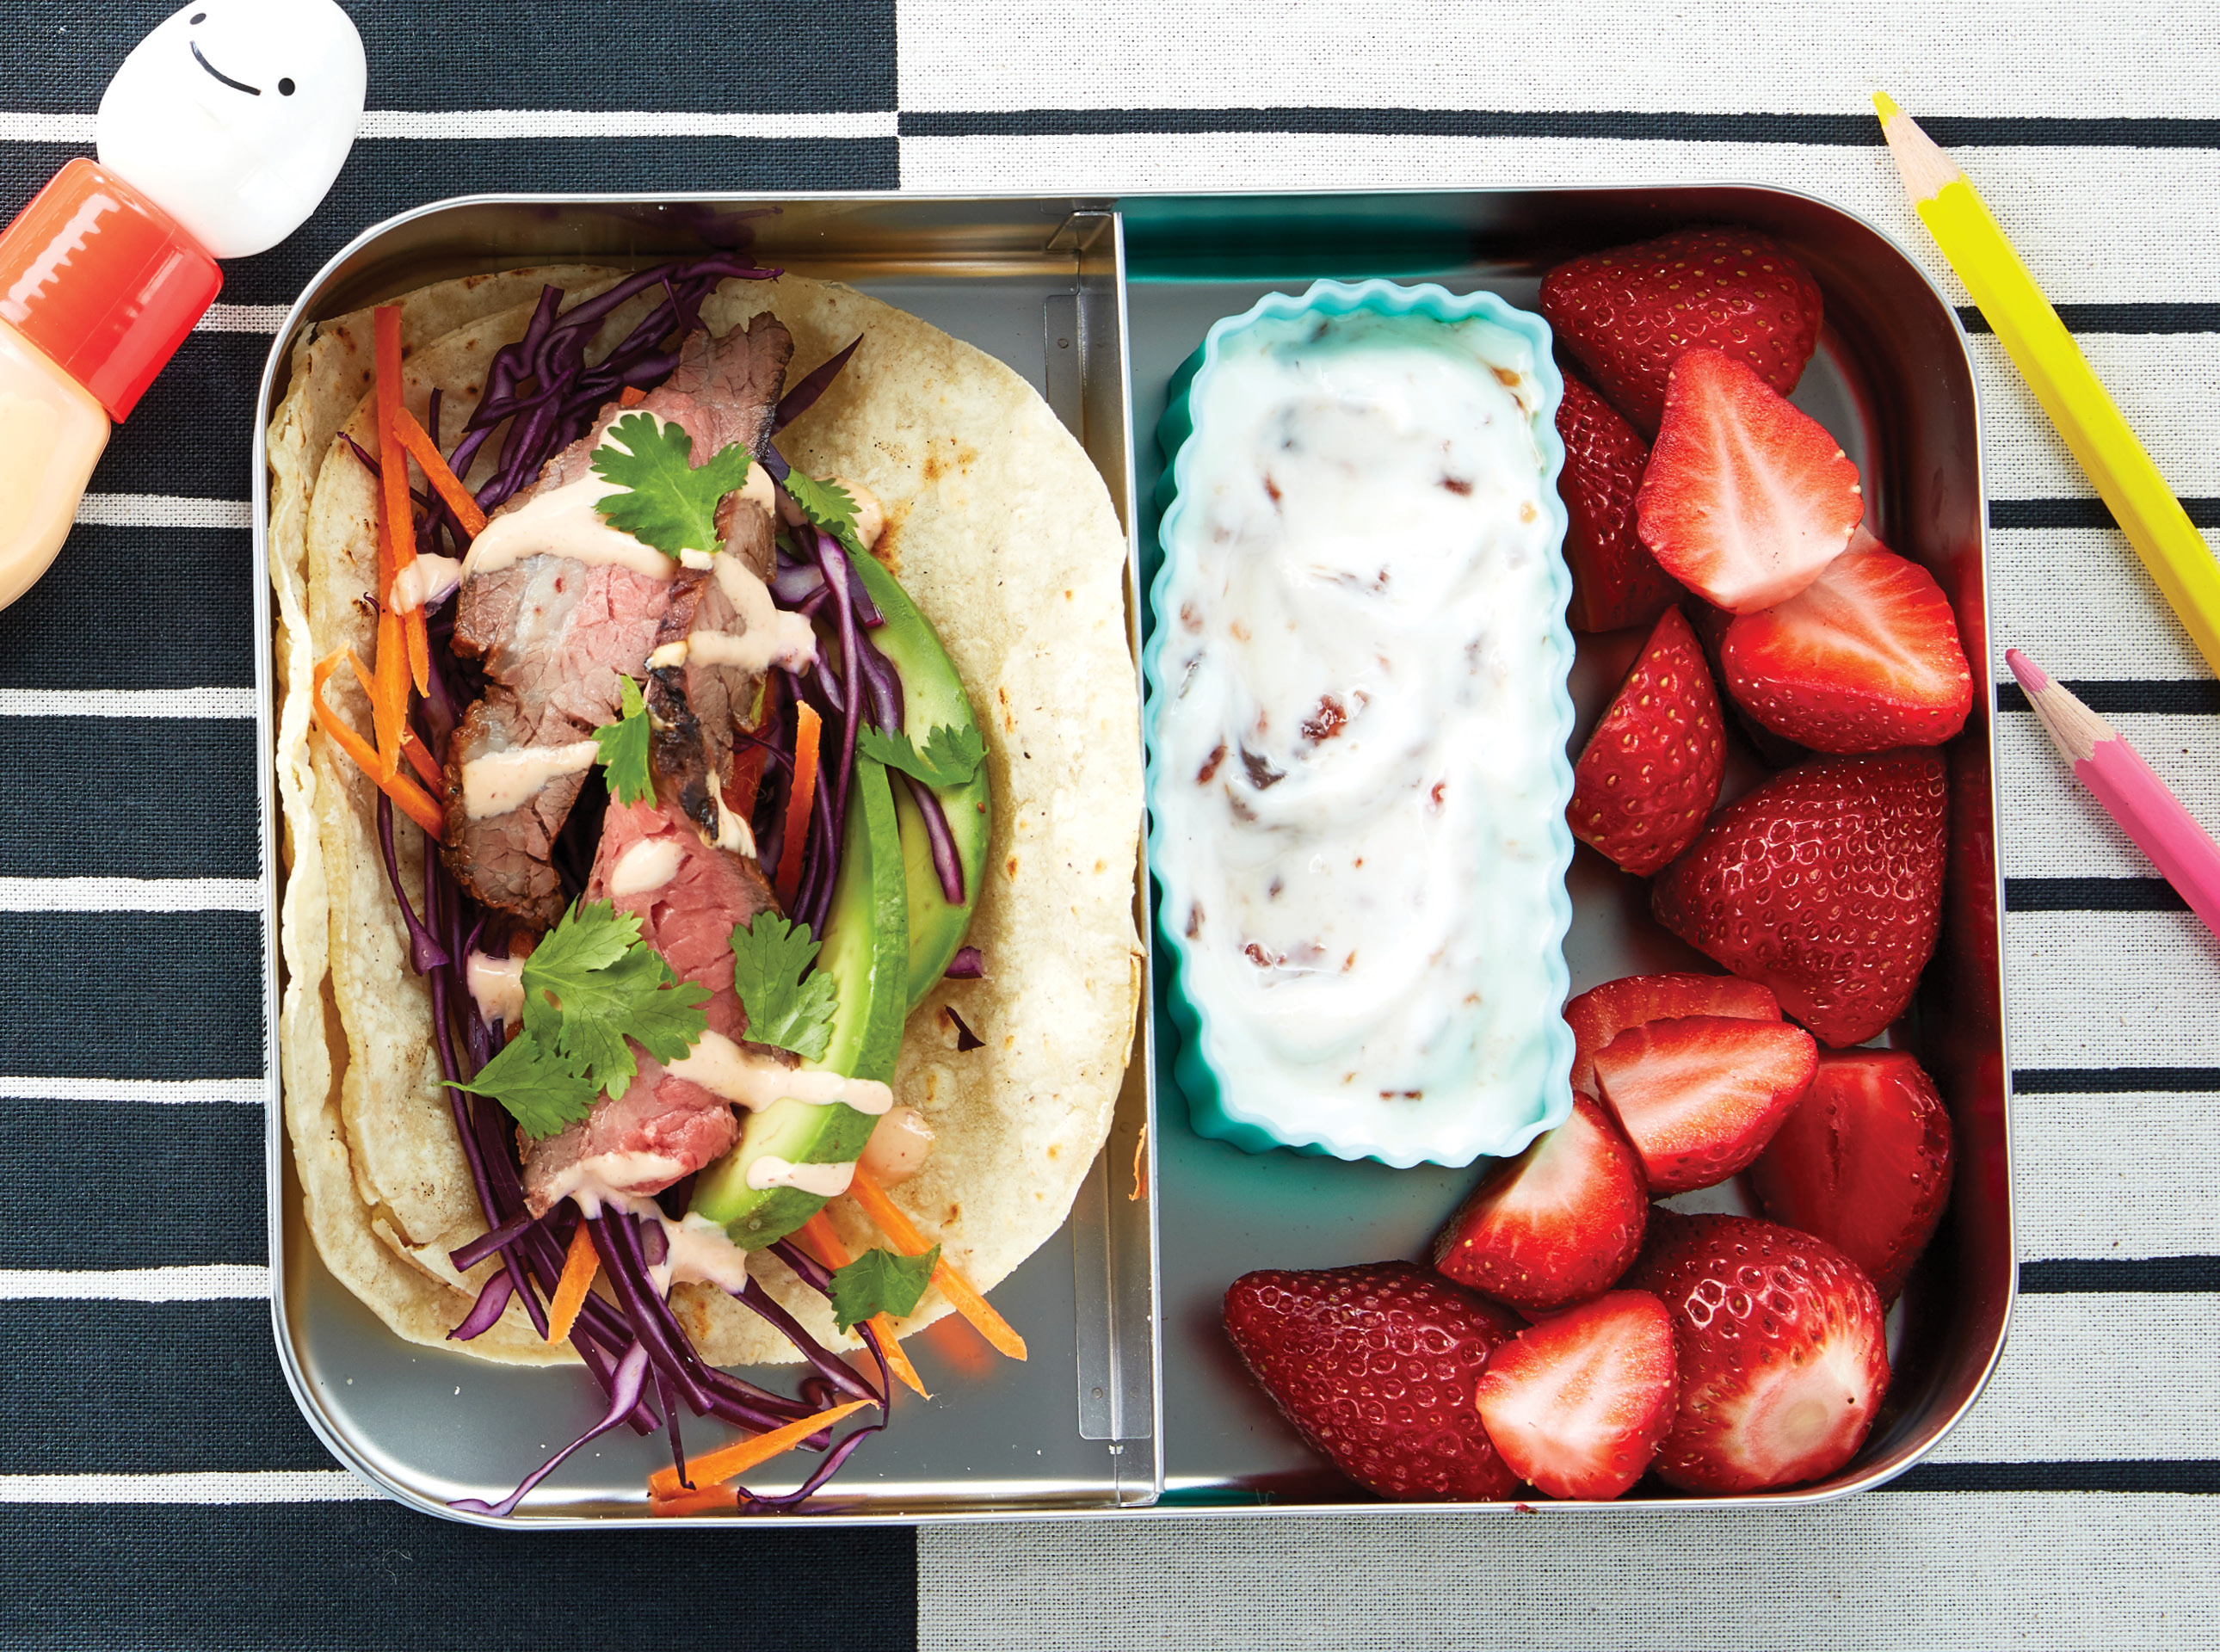 lunch box with taco and yogurt